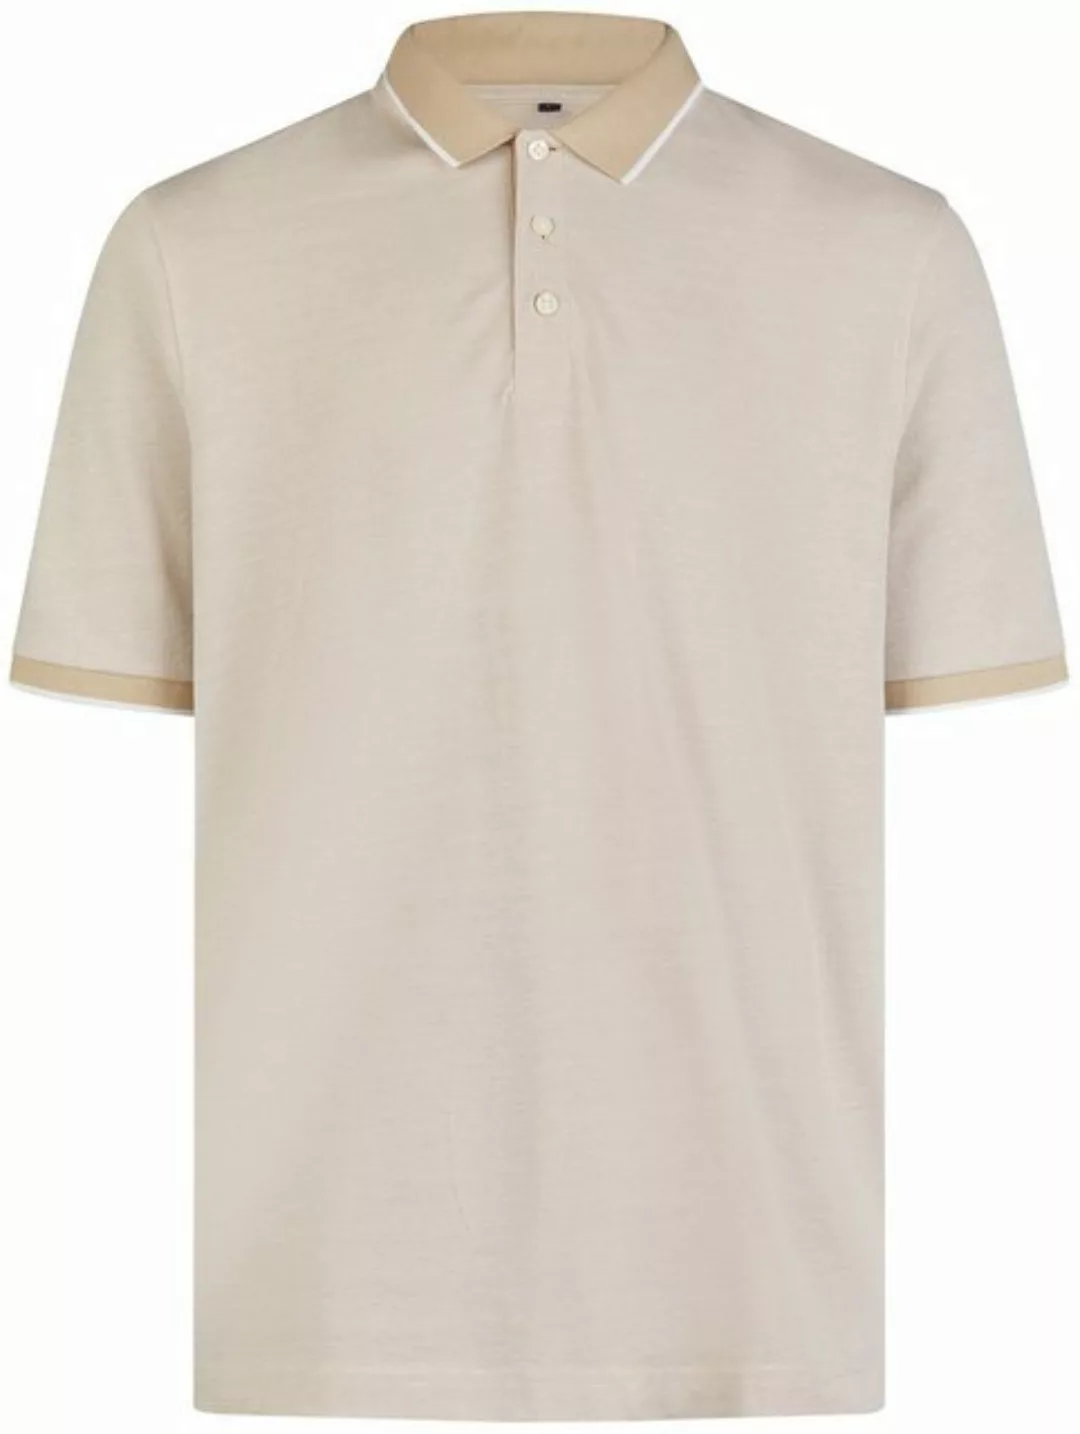 MARVELIS Poloshirt Poloshirt - Quick Dry - Einfarbig - Lackrot Quick Dry günstig online kaufen